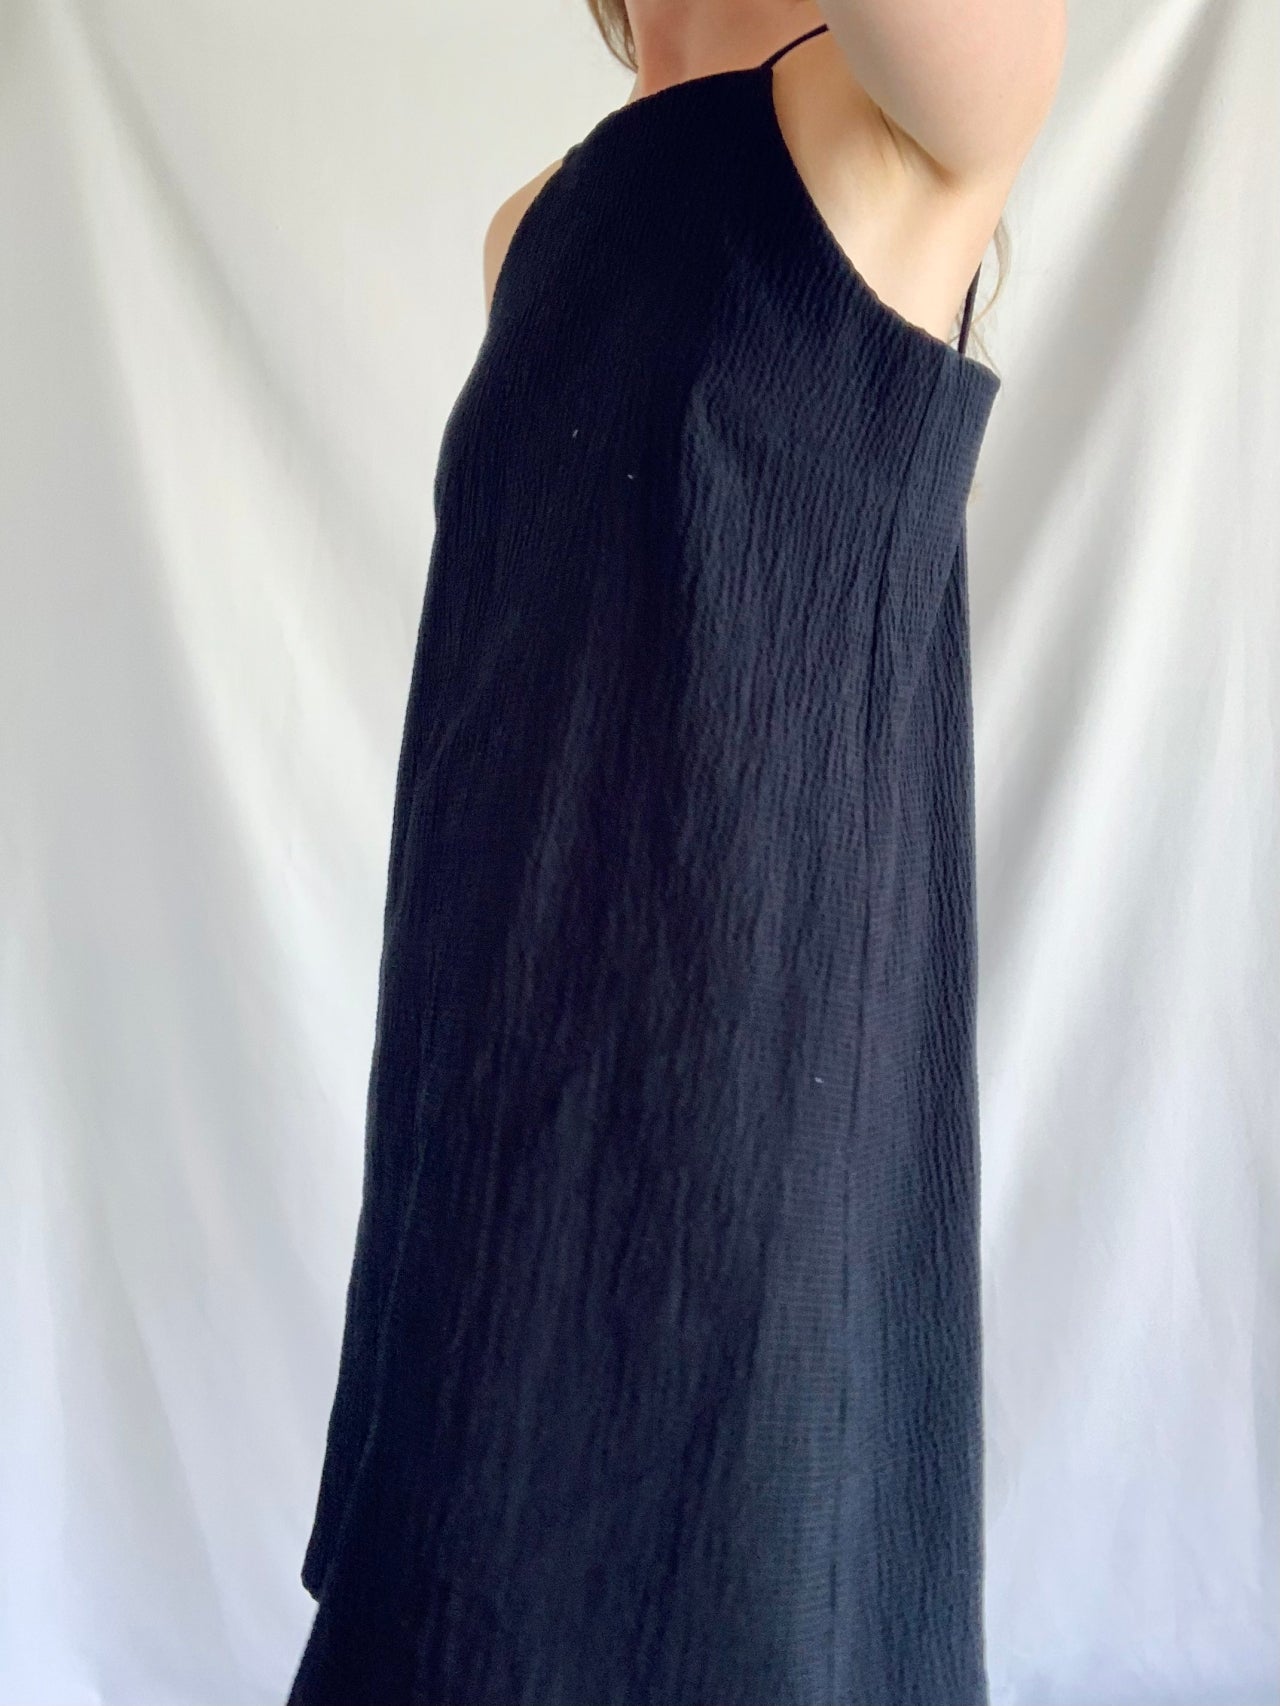 Summer Dress - Black